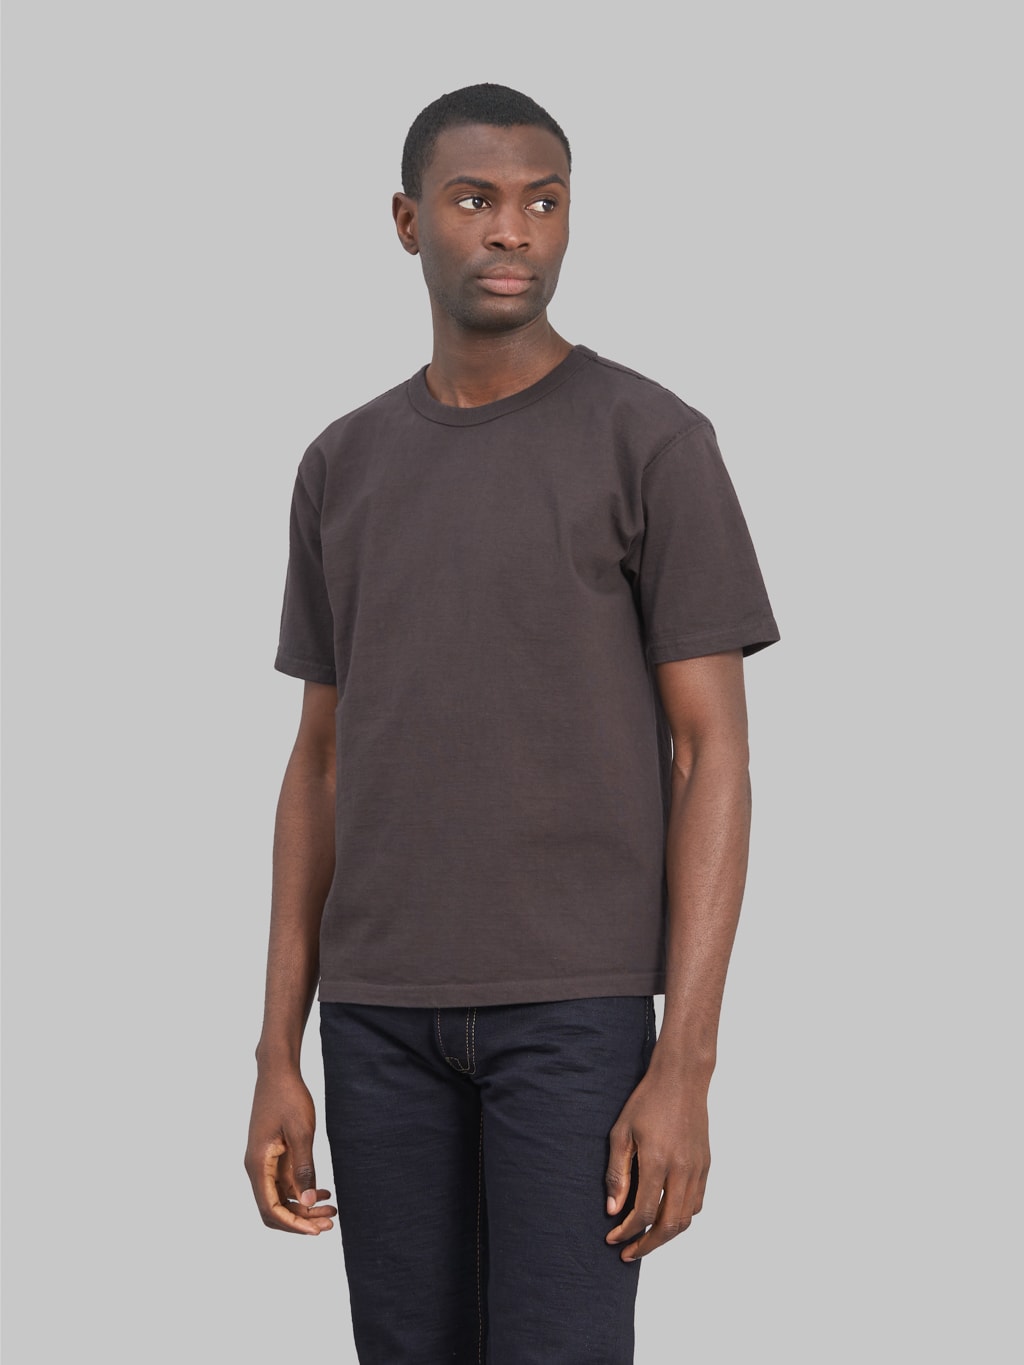 Studio D'Artisan 9913 Loopwheel T-Shirt Charcoal Black